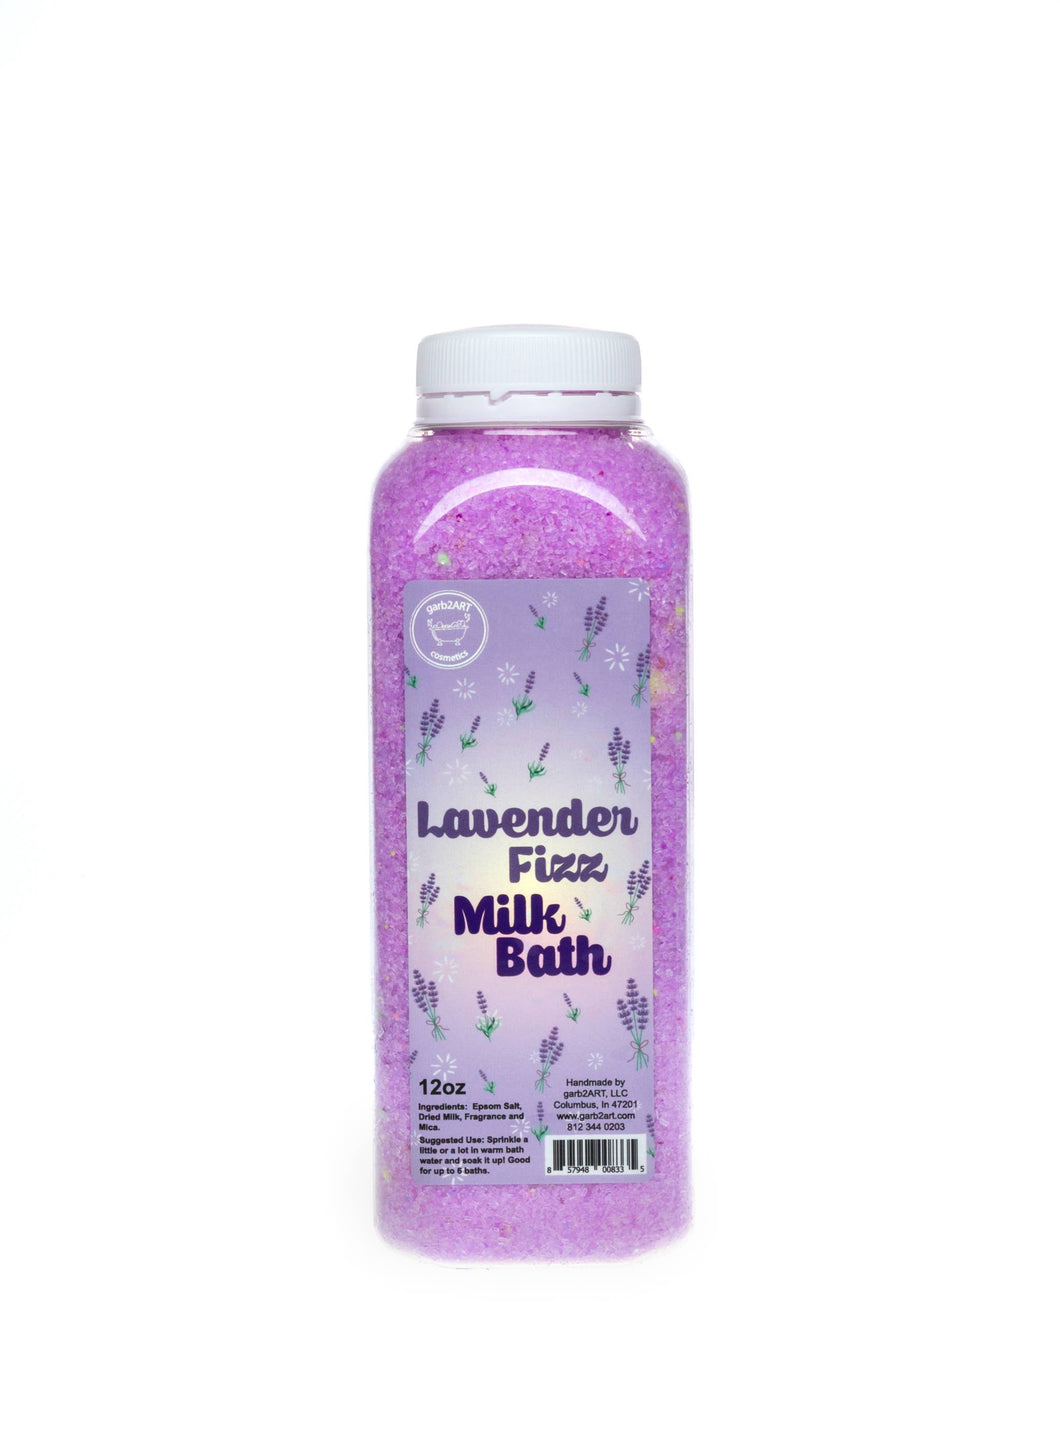 garb2ART Cosmetics - Lavender Fizz Milk Bath